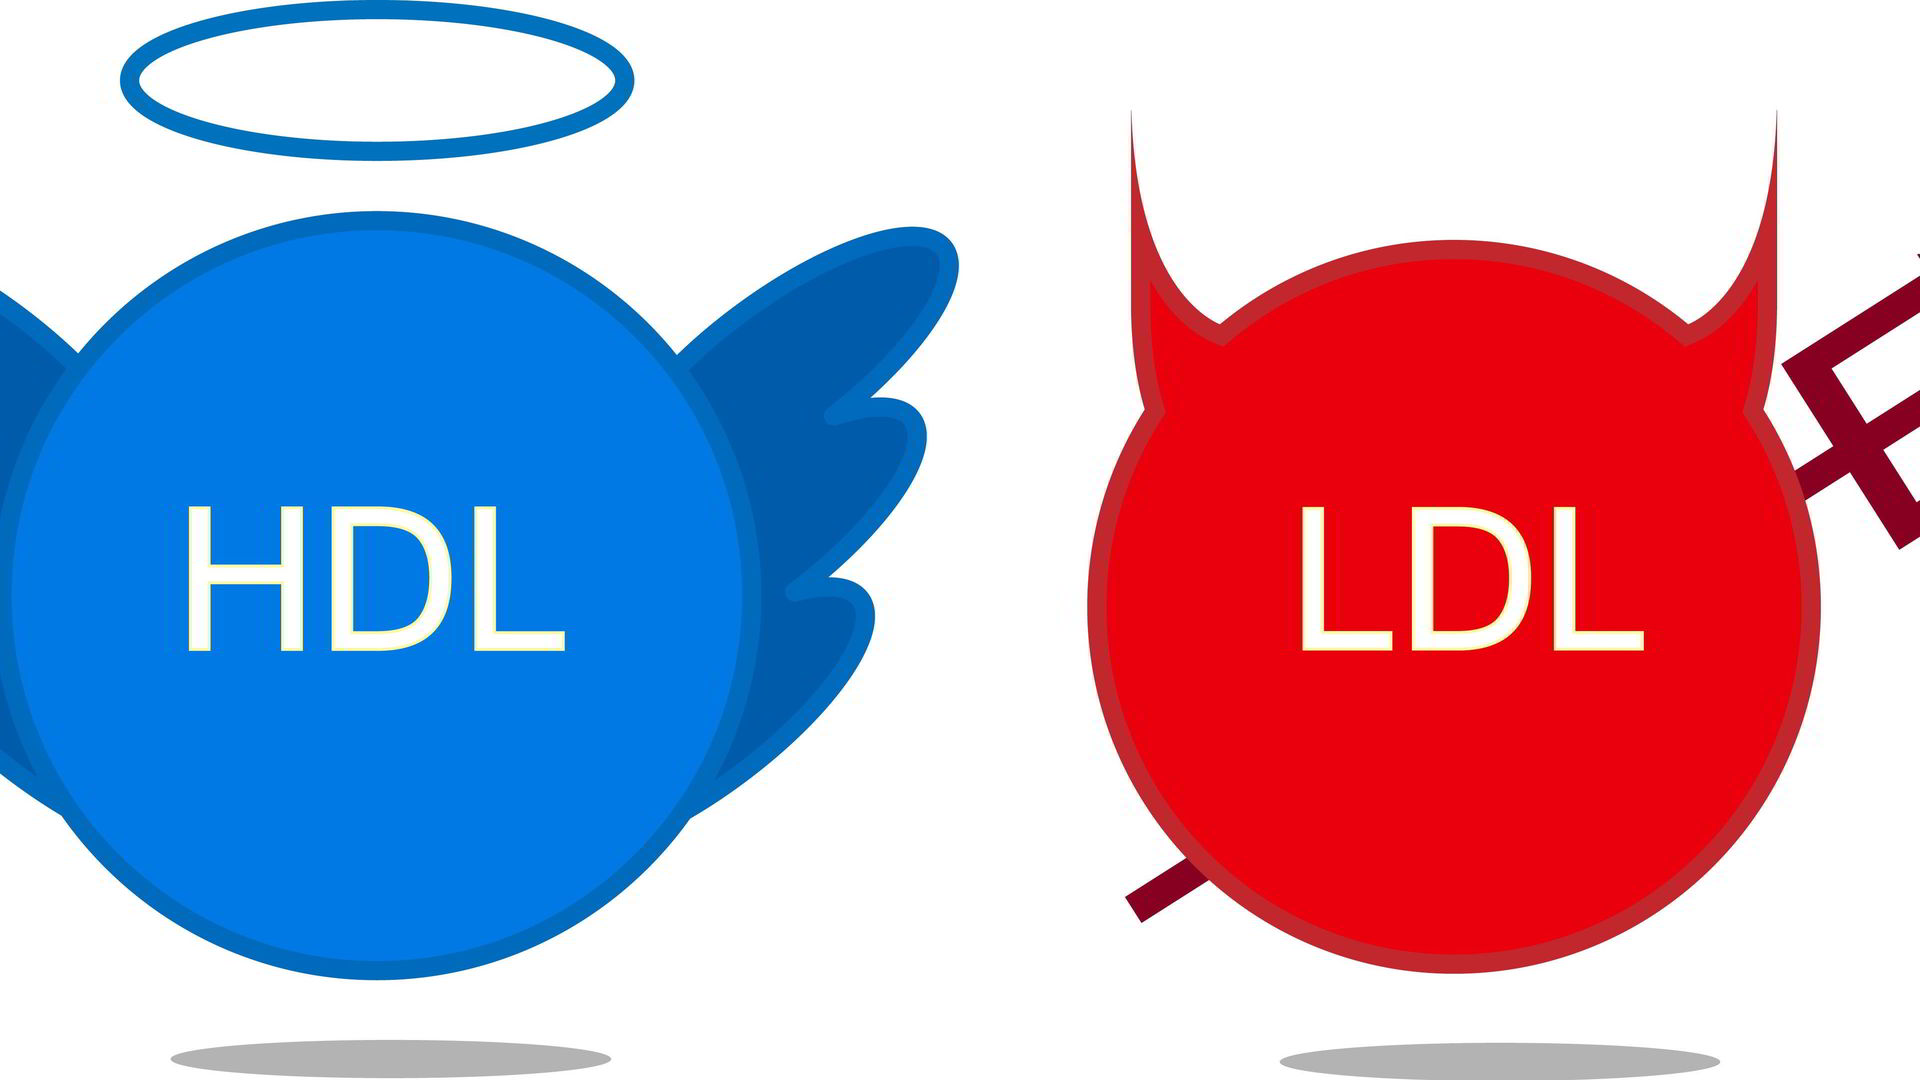 HDL vs LDL cholesterol.